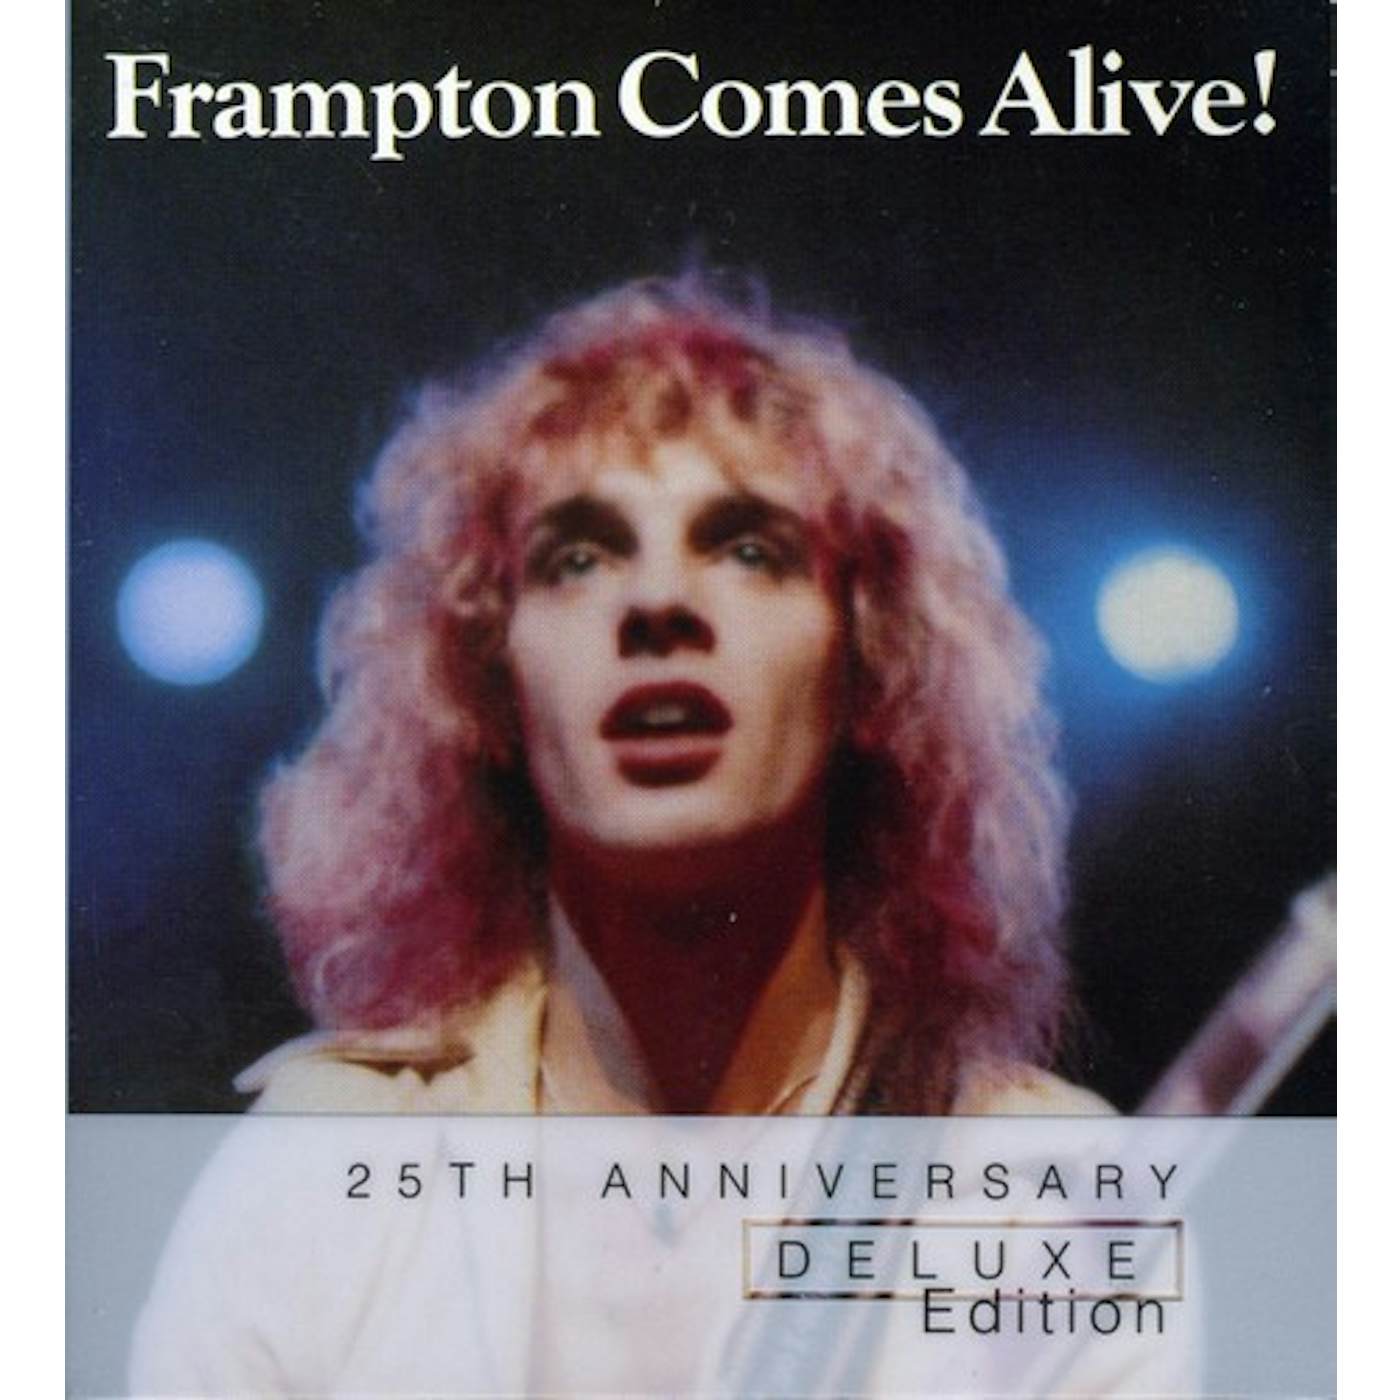 Peter Frampton FRAMPTON COMES ALIVE (25TH DLX ANN EDT) CD